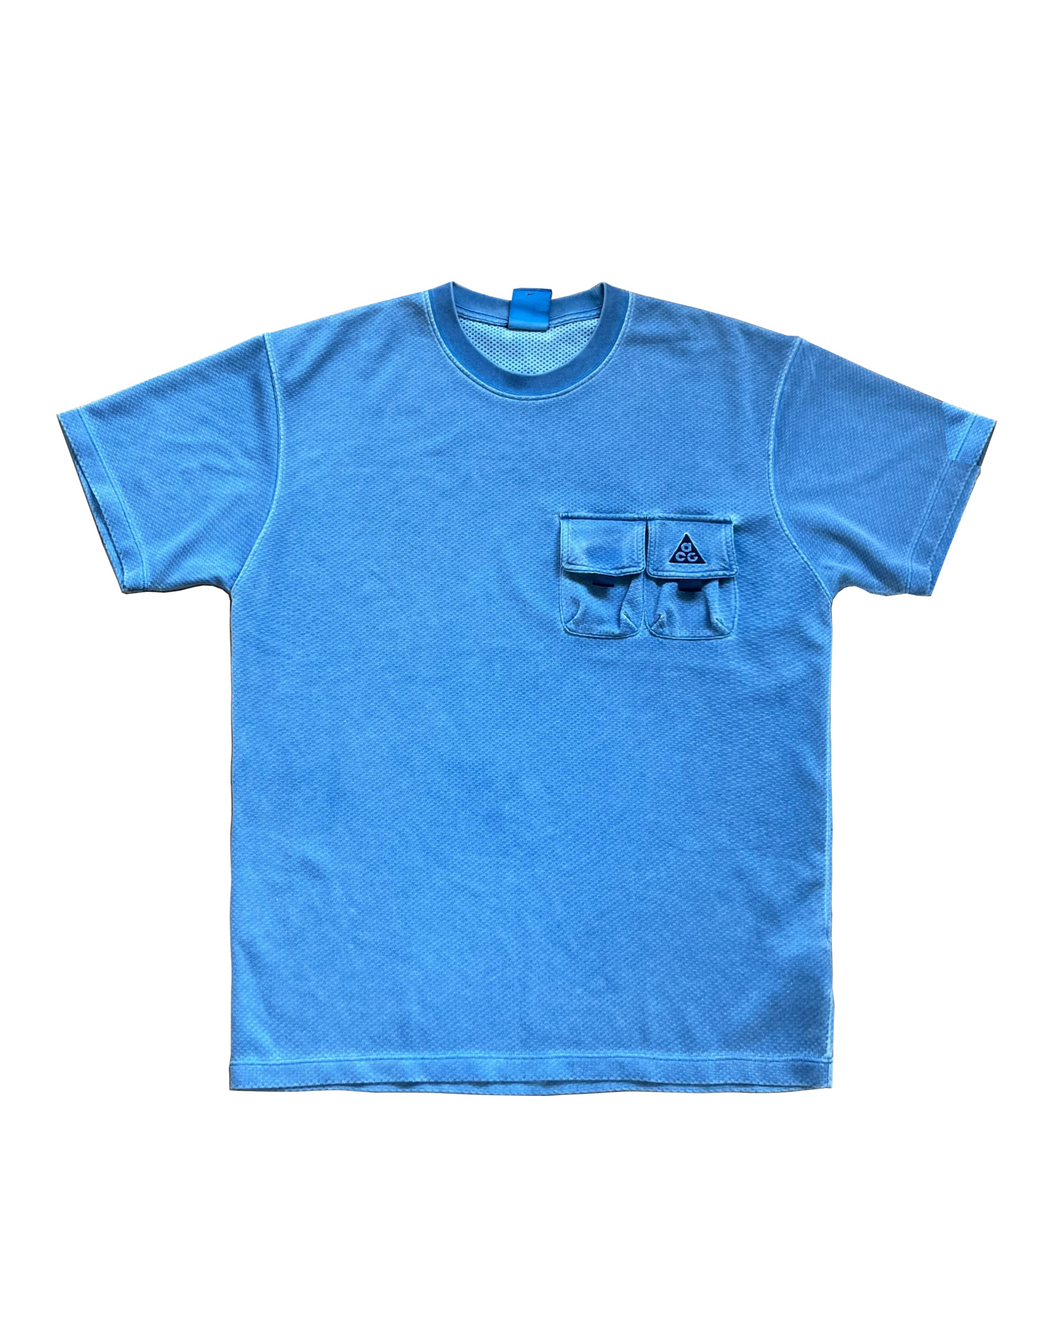 Nike ACG Blue Mesh Faded Cotton T-Shirt